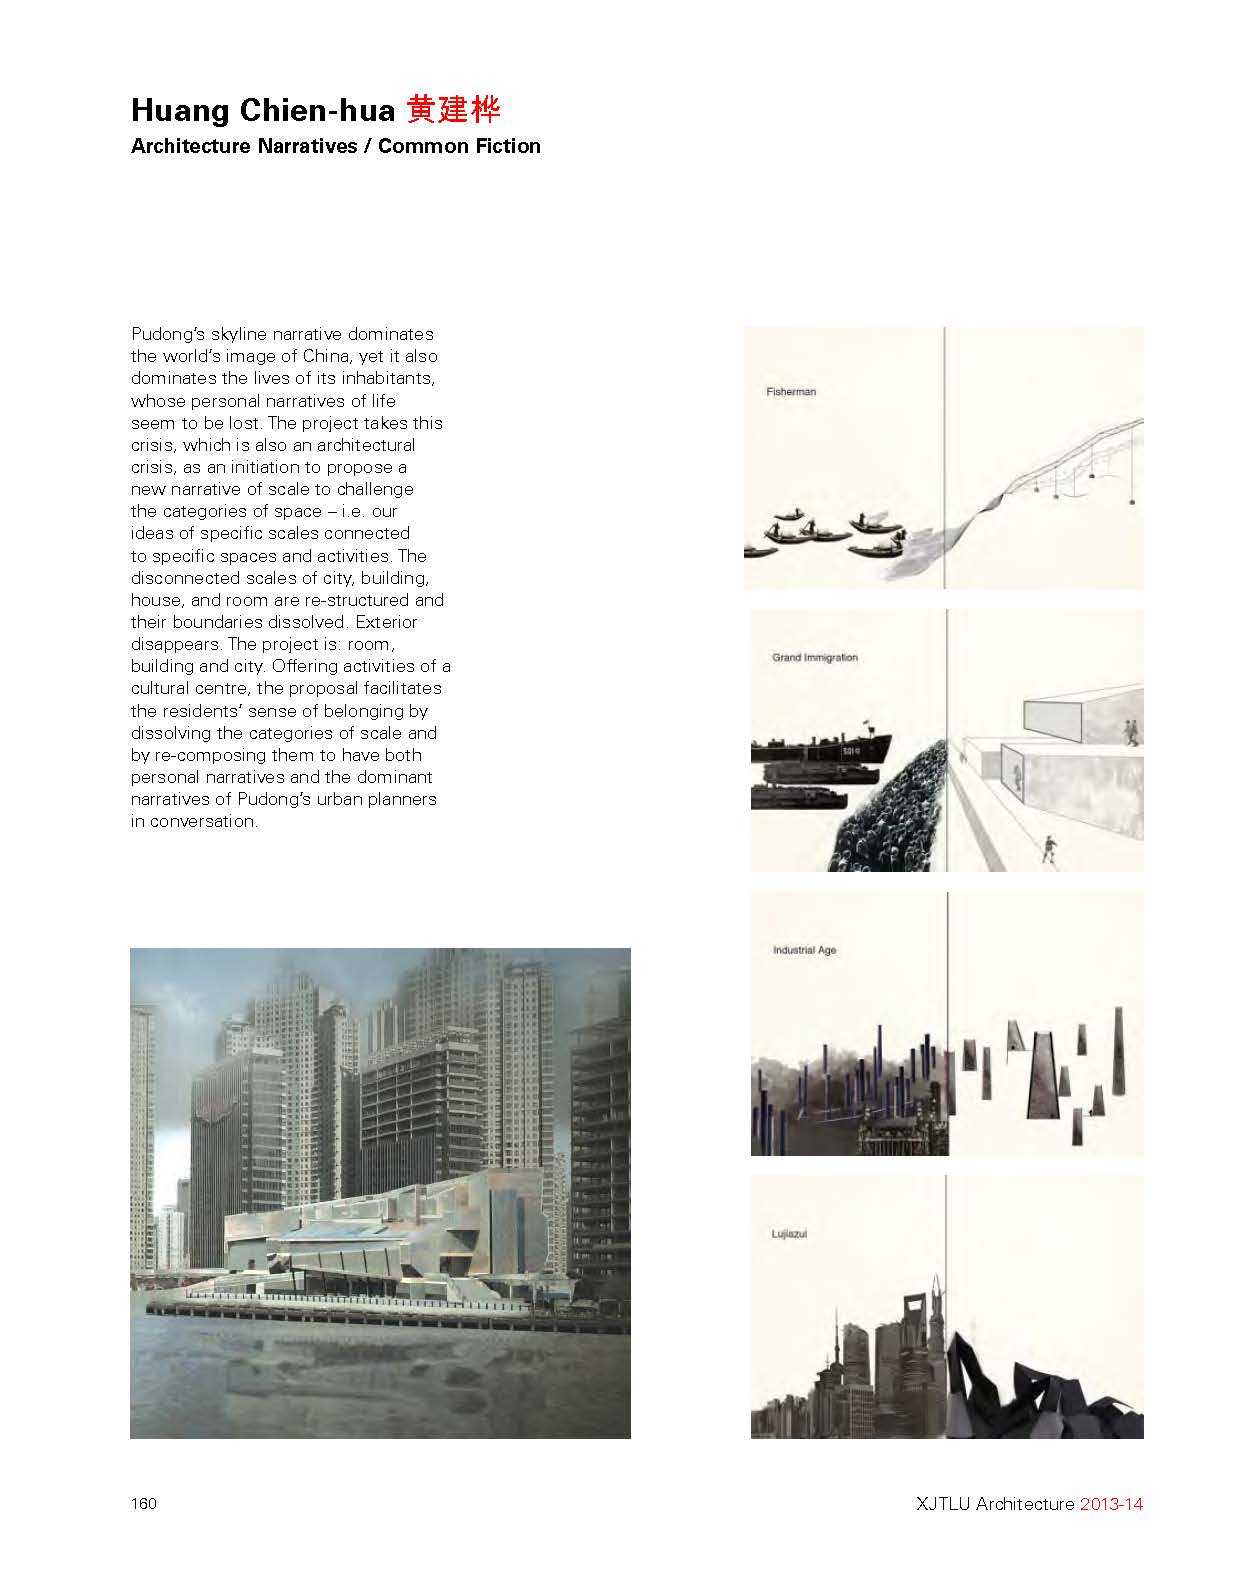 Architecture Narratives, 2014 